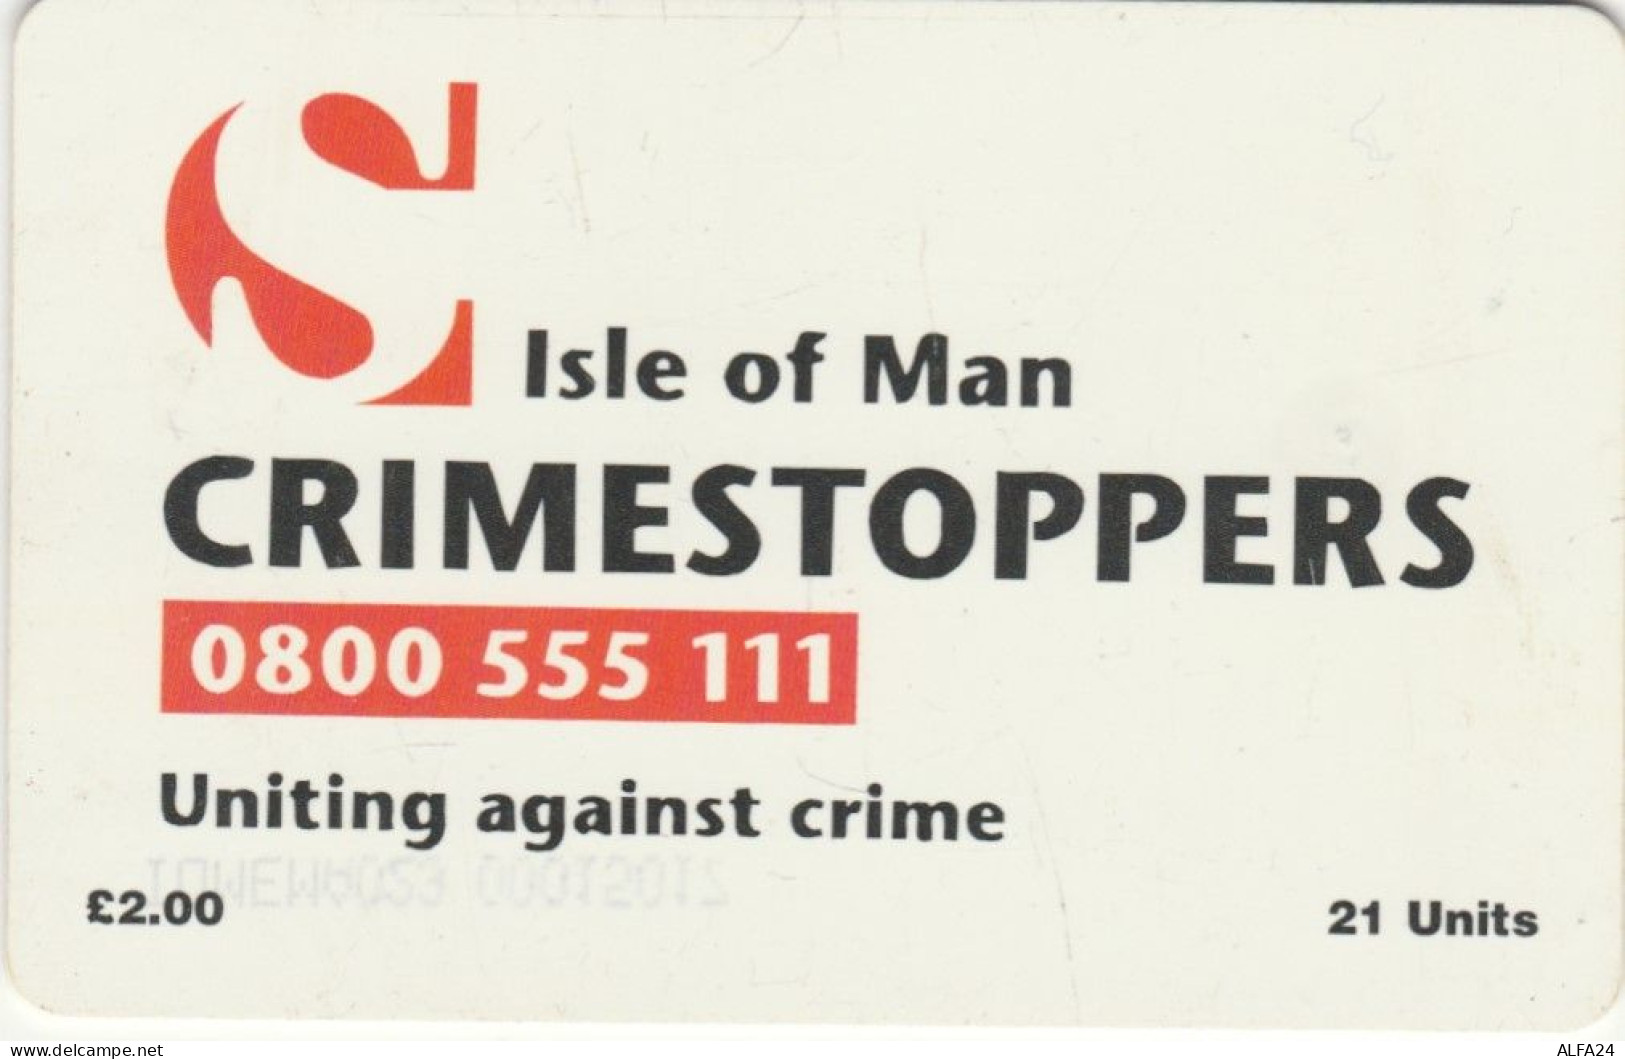 PHONE CARD ISLE OF MAN  (E109.22.4 - Isle Of Man